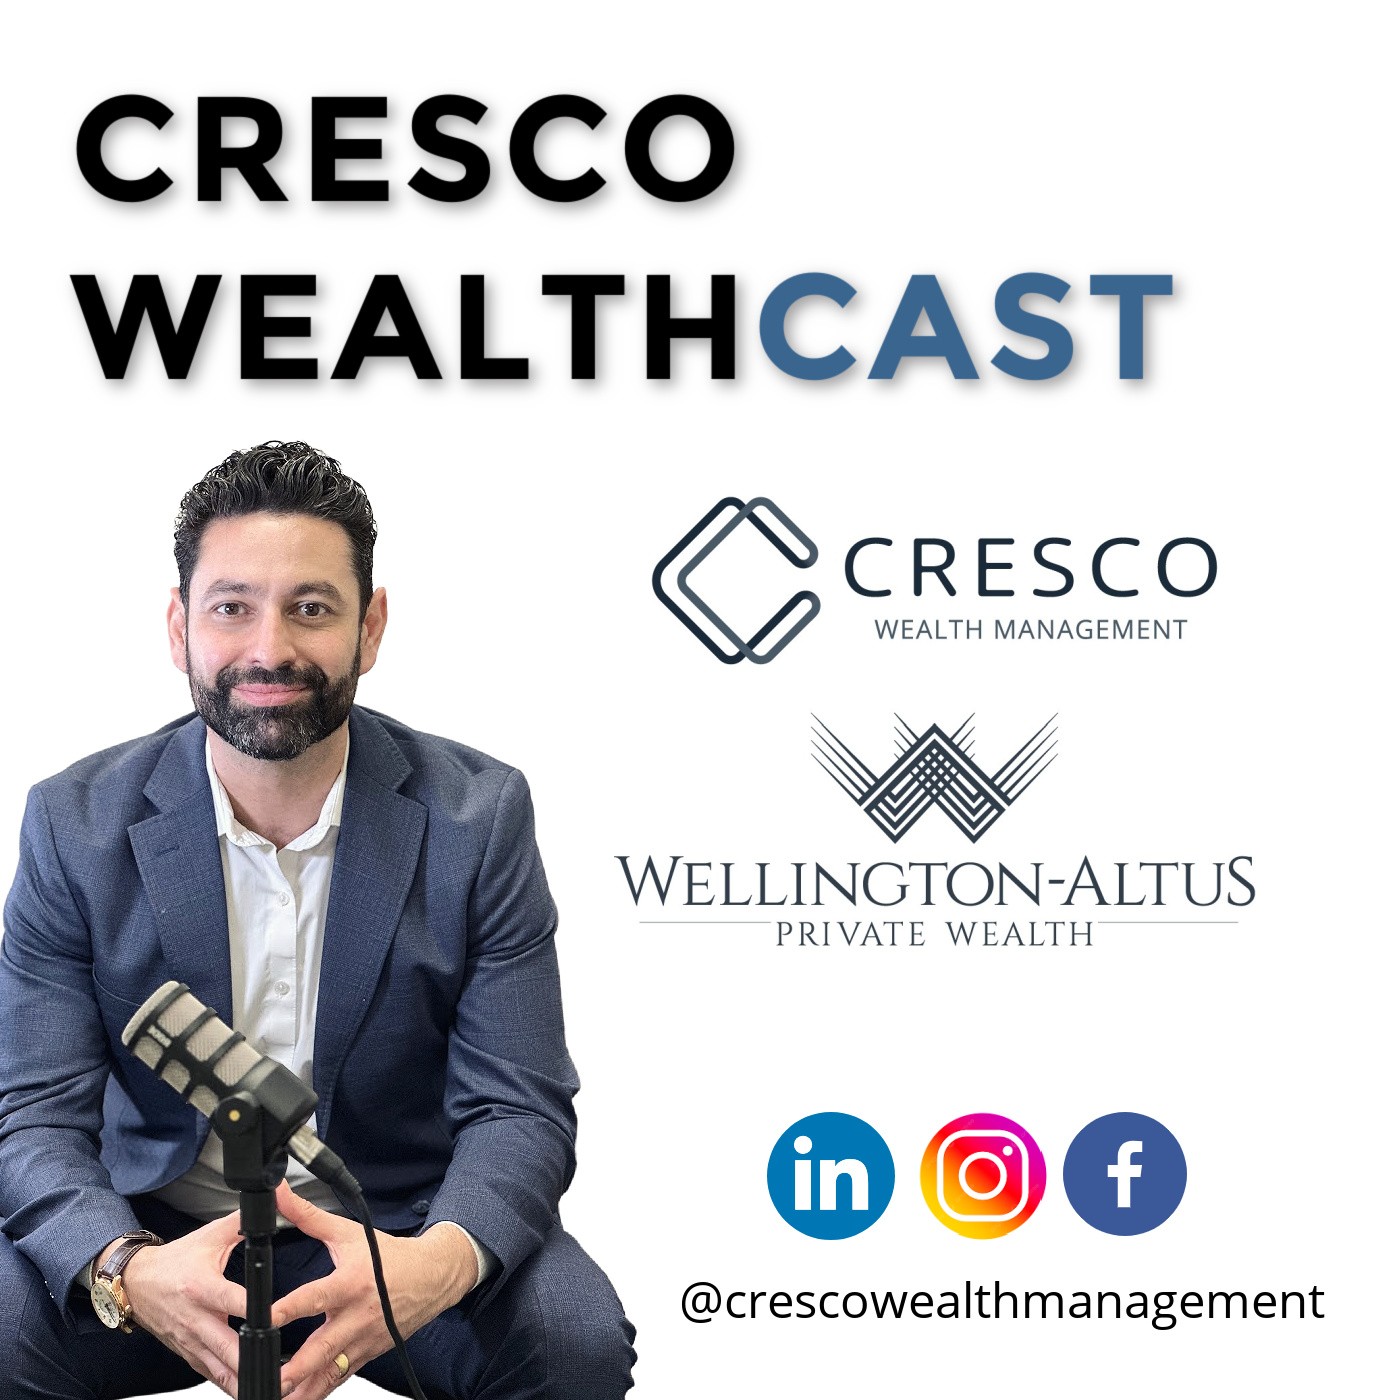 The Cresco Wealthcast